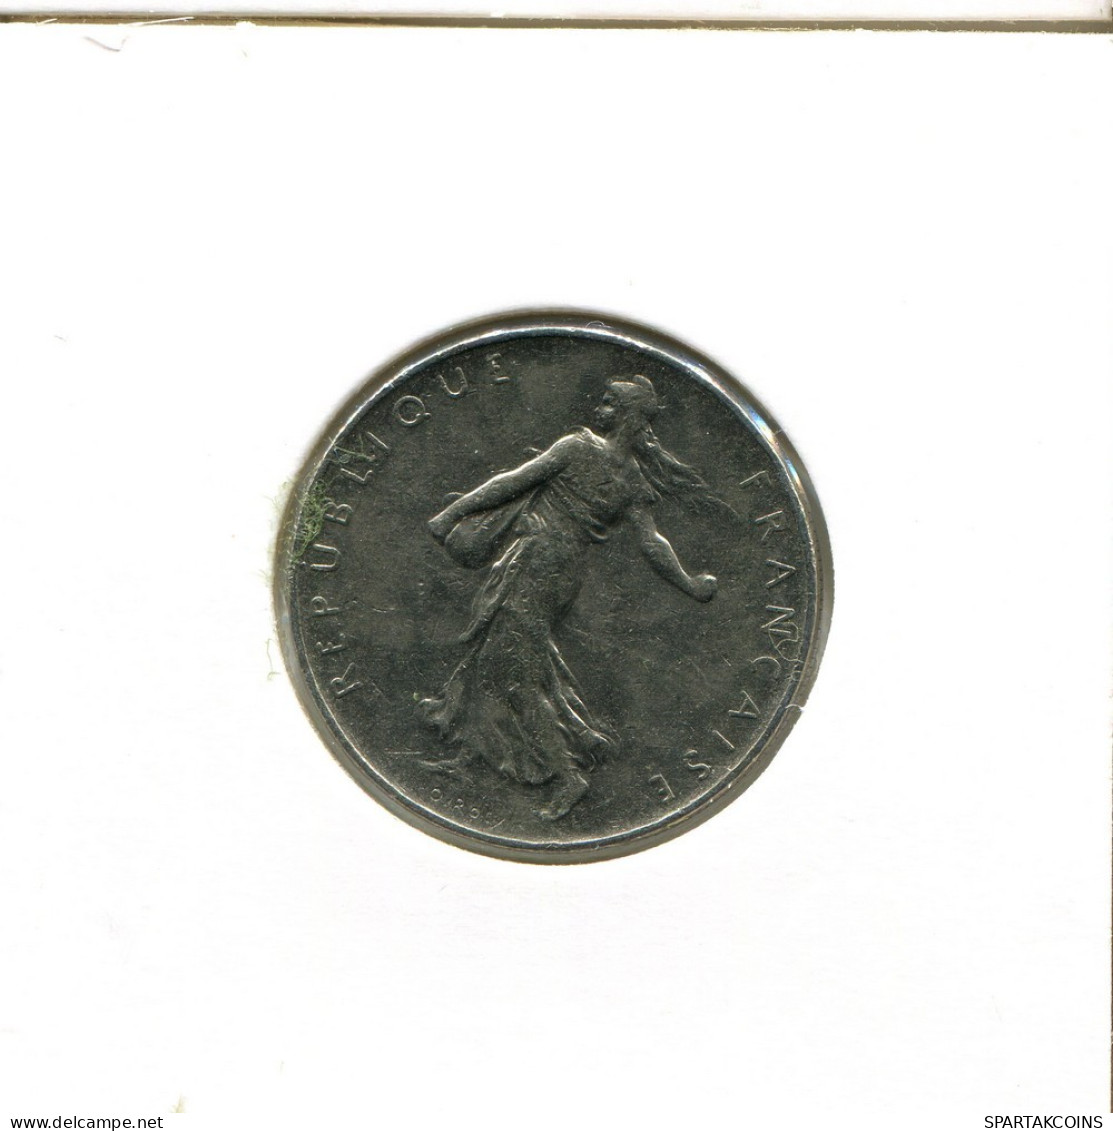 1 FRANC 1972 FRANCIA FRANCE Moneda #BA913.E.A - 1 Franc